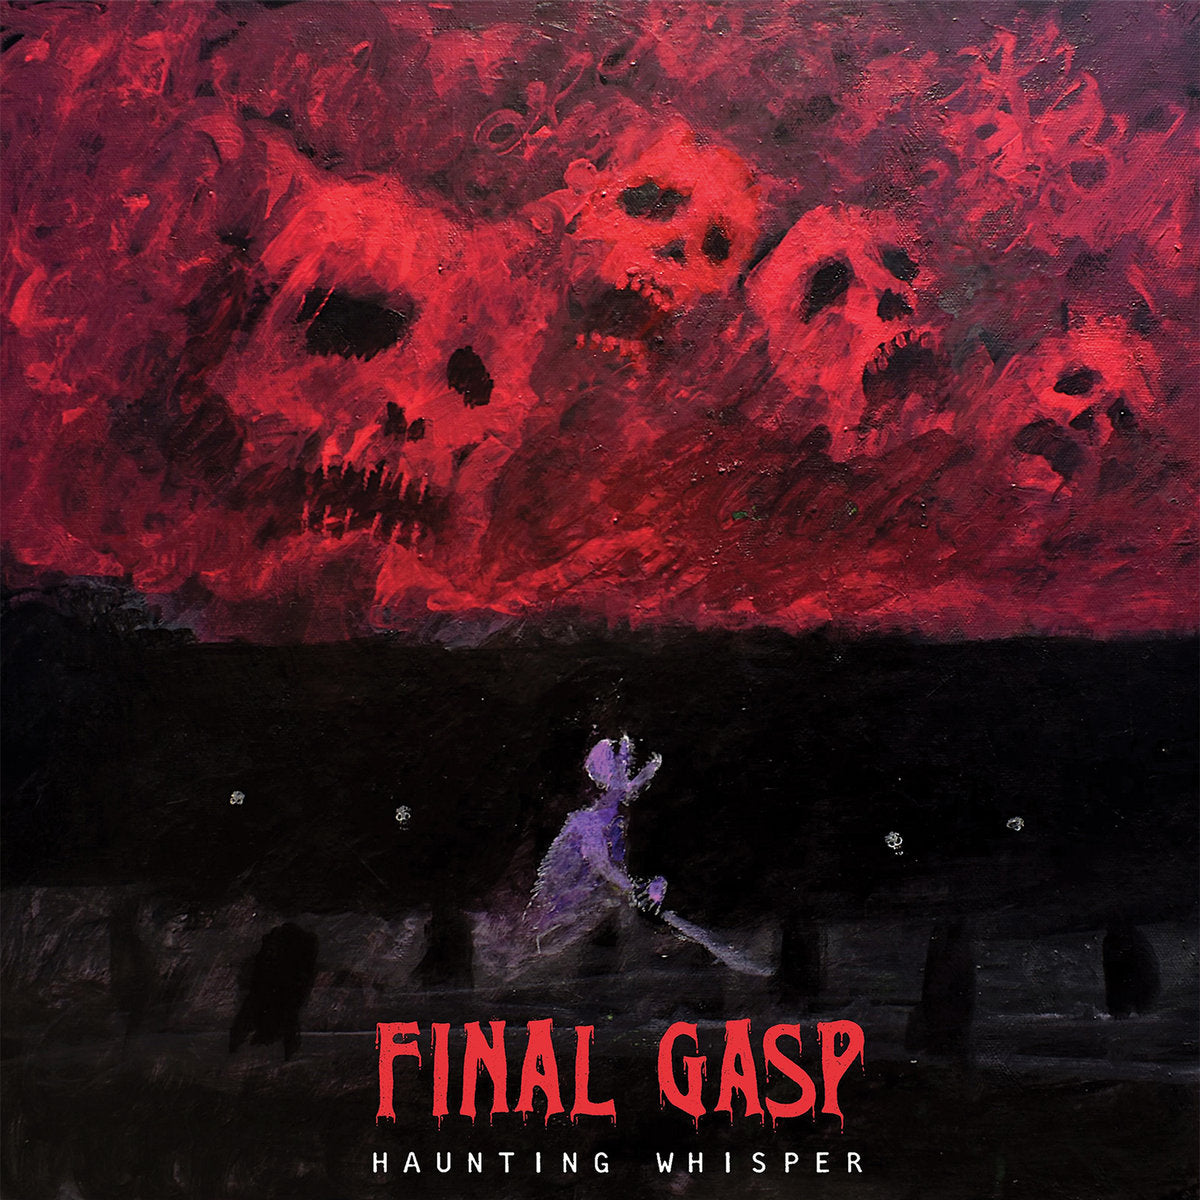 Final Gasp "Haunting Whisper" 12" Vinyl